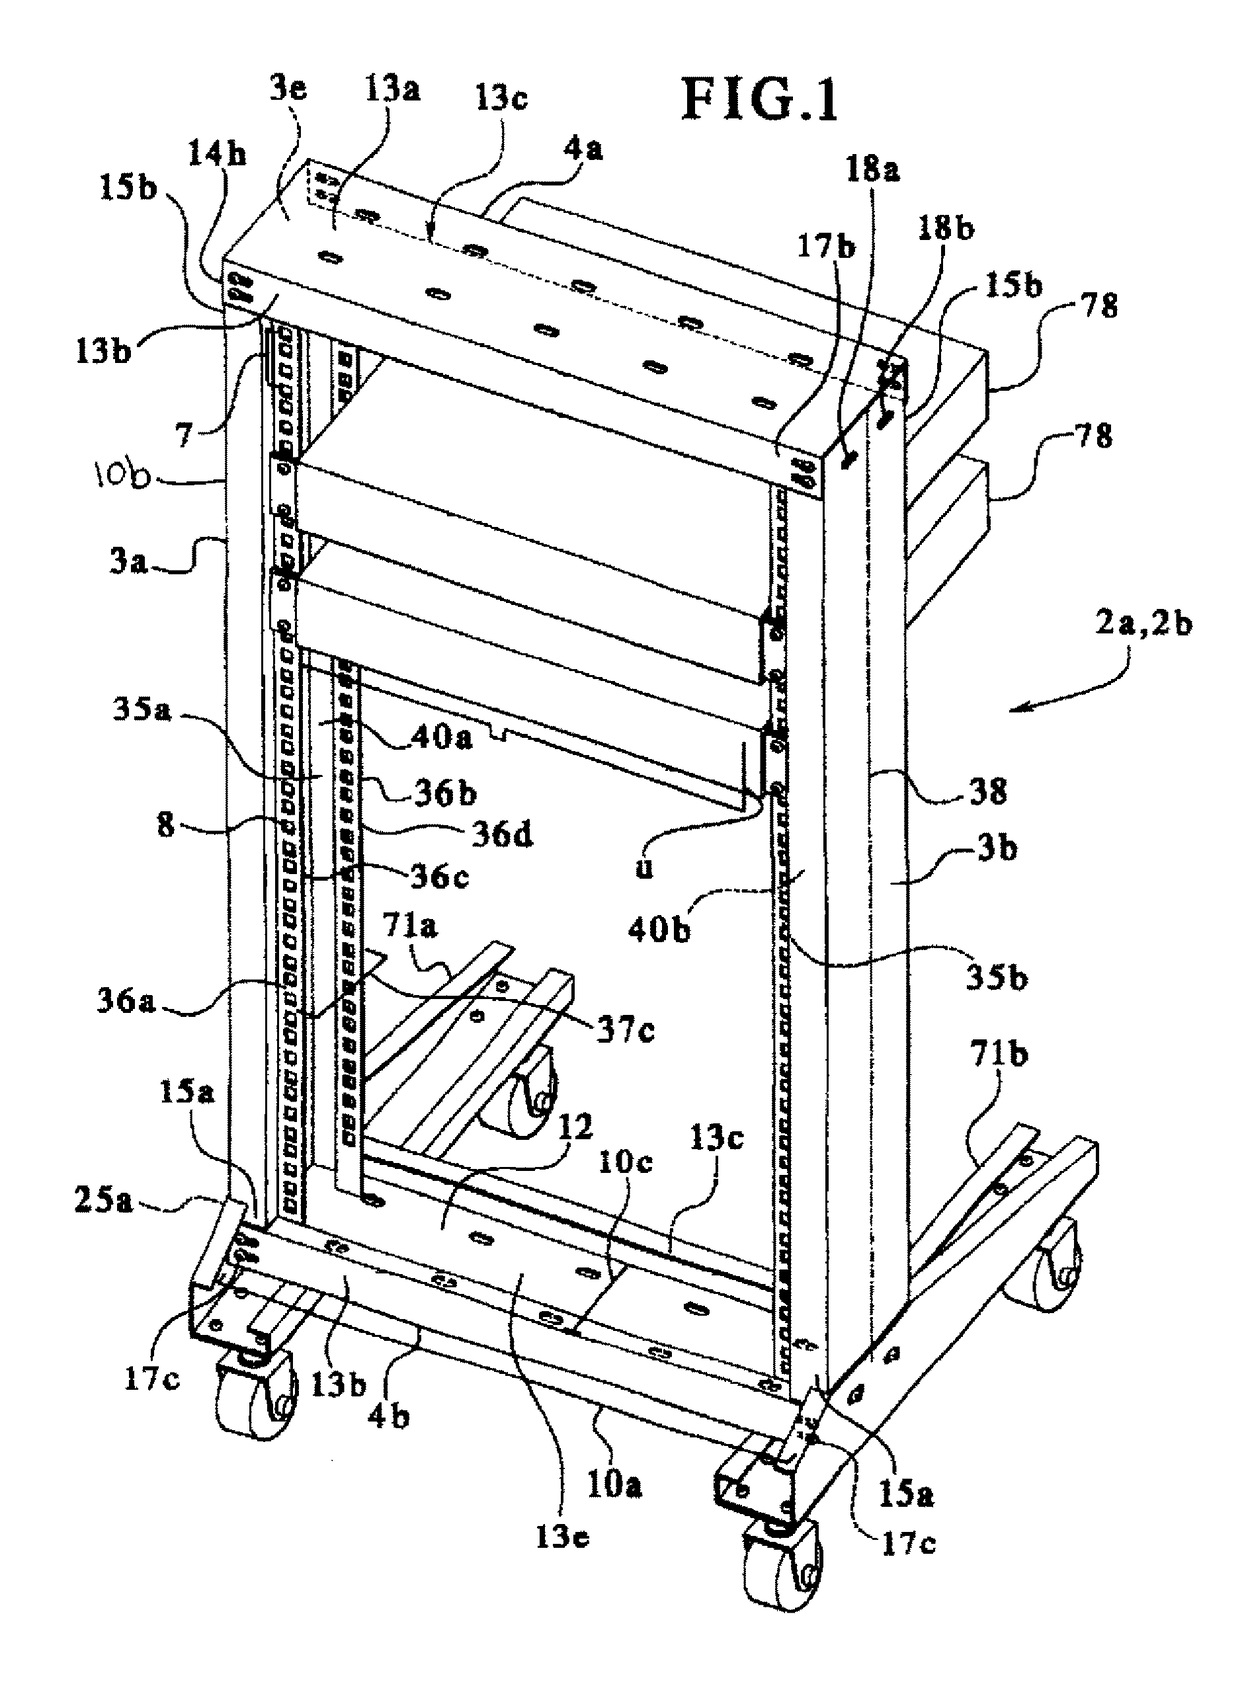 Modular mount rack frame